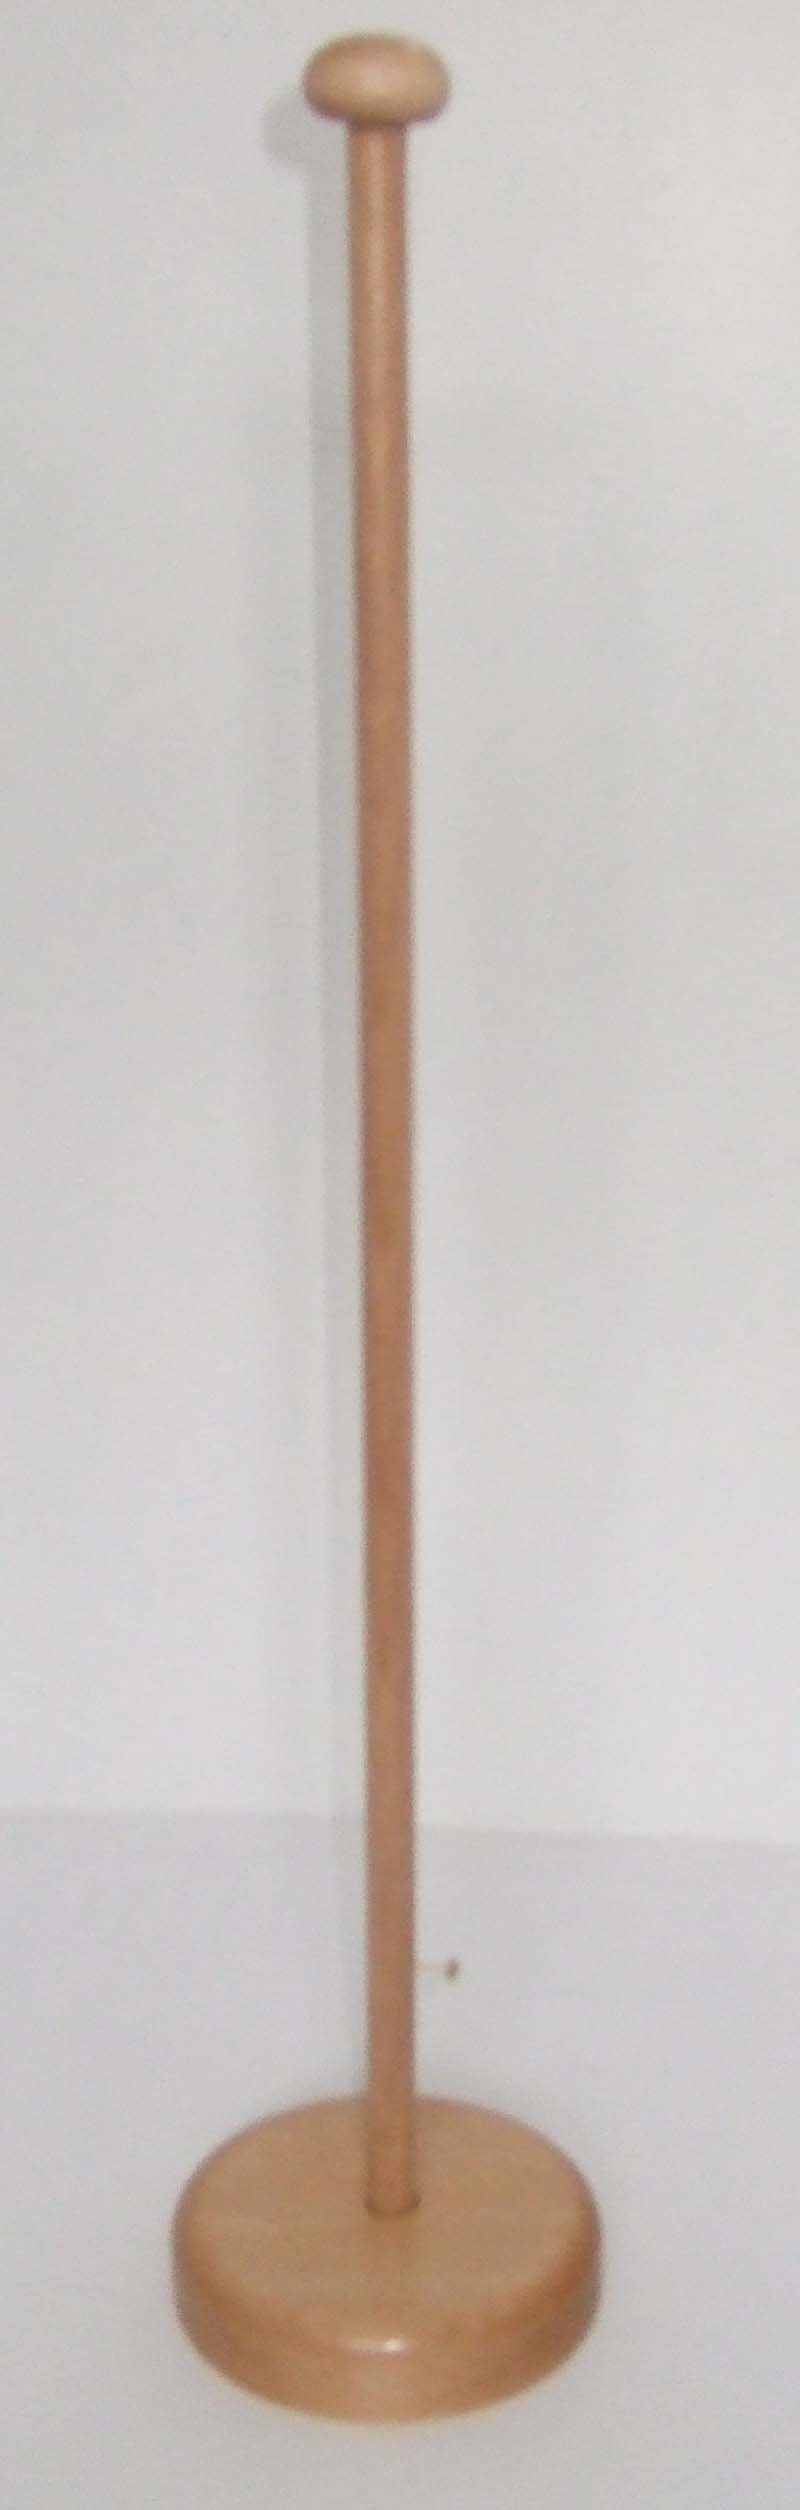 1 er Tischflaggenständer Holz ca. 42 cm